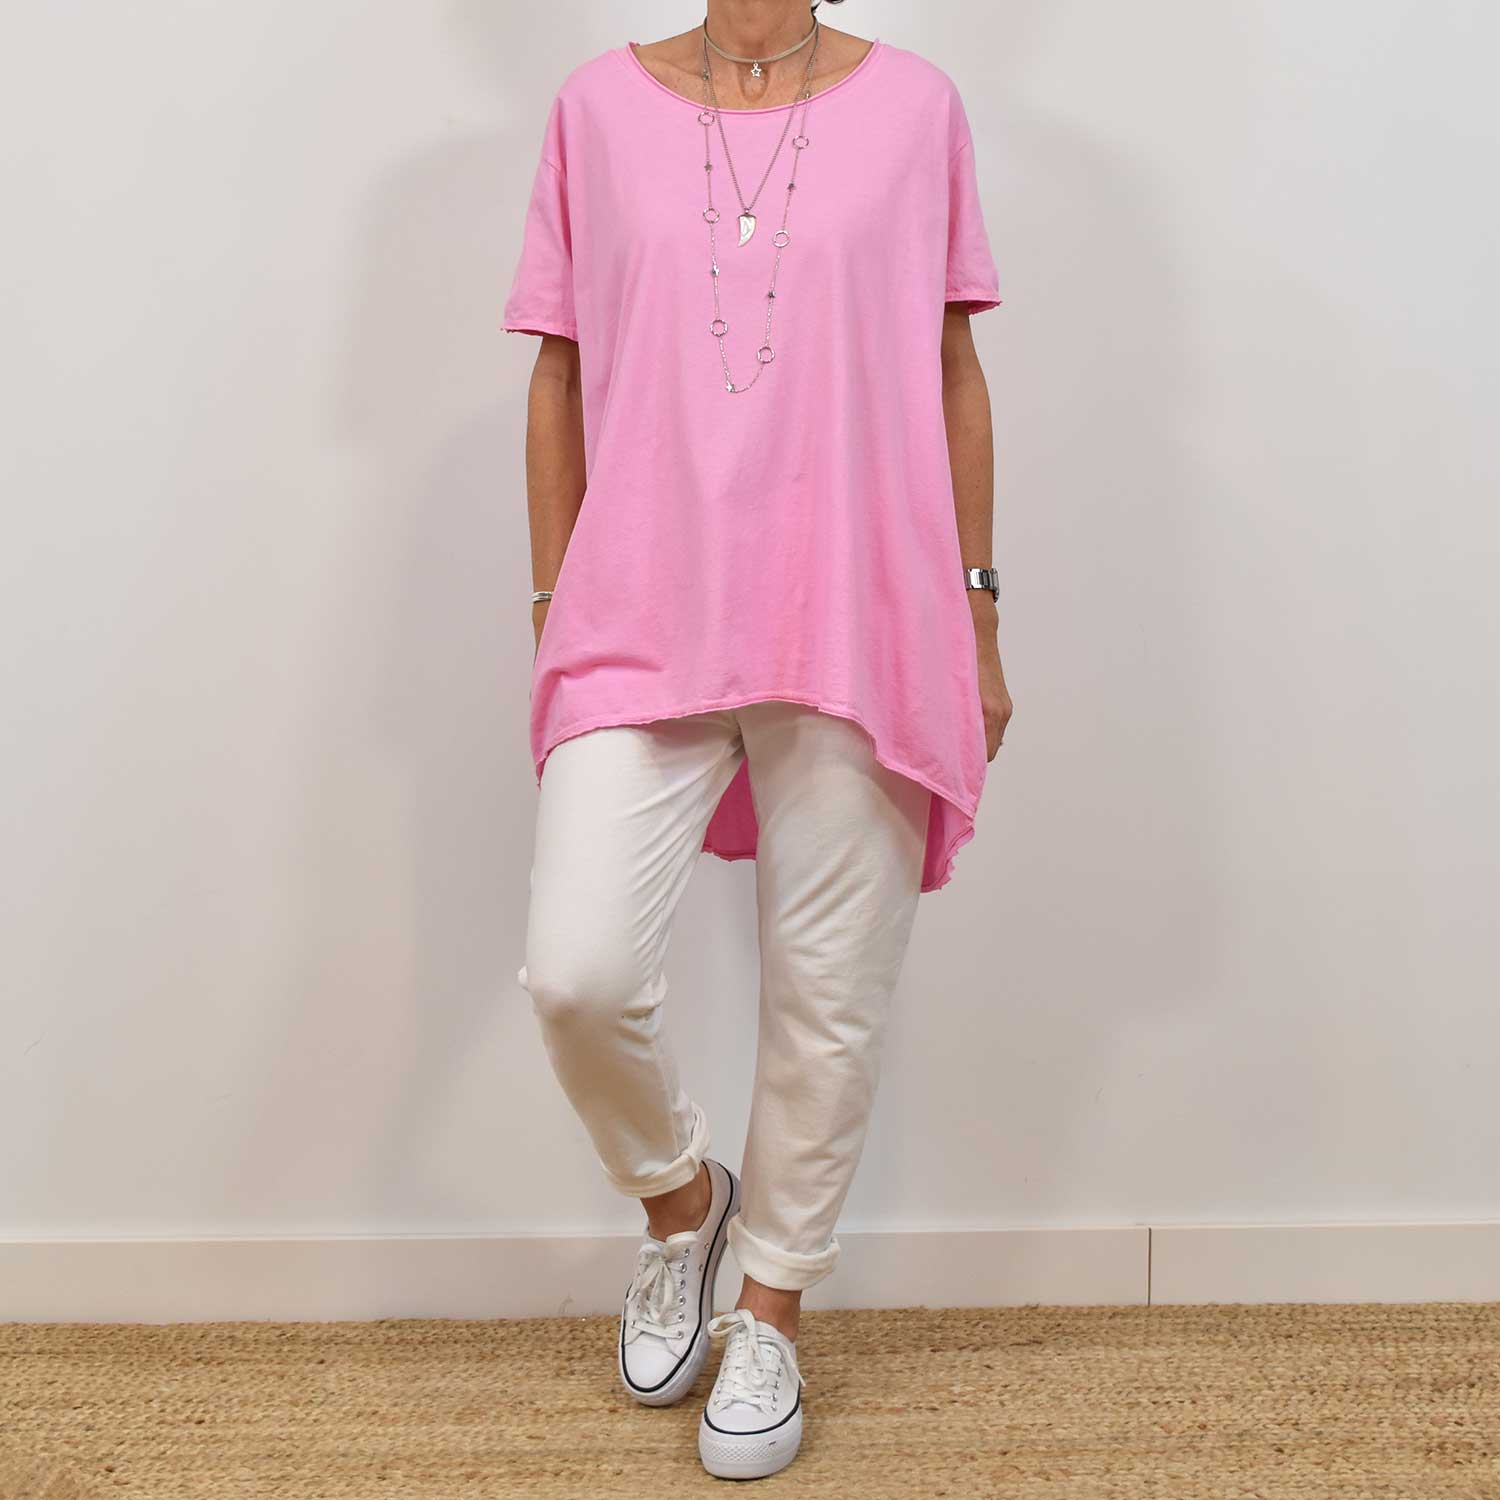 Camiseta asimétrica manga corta rosa